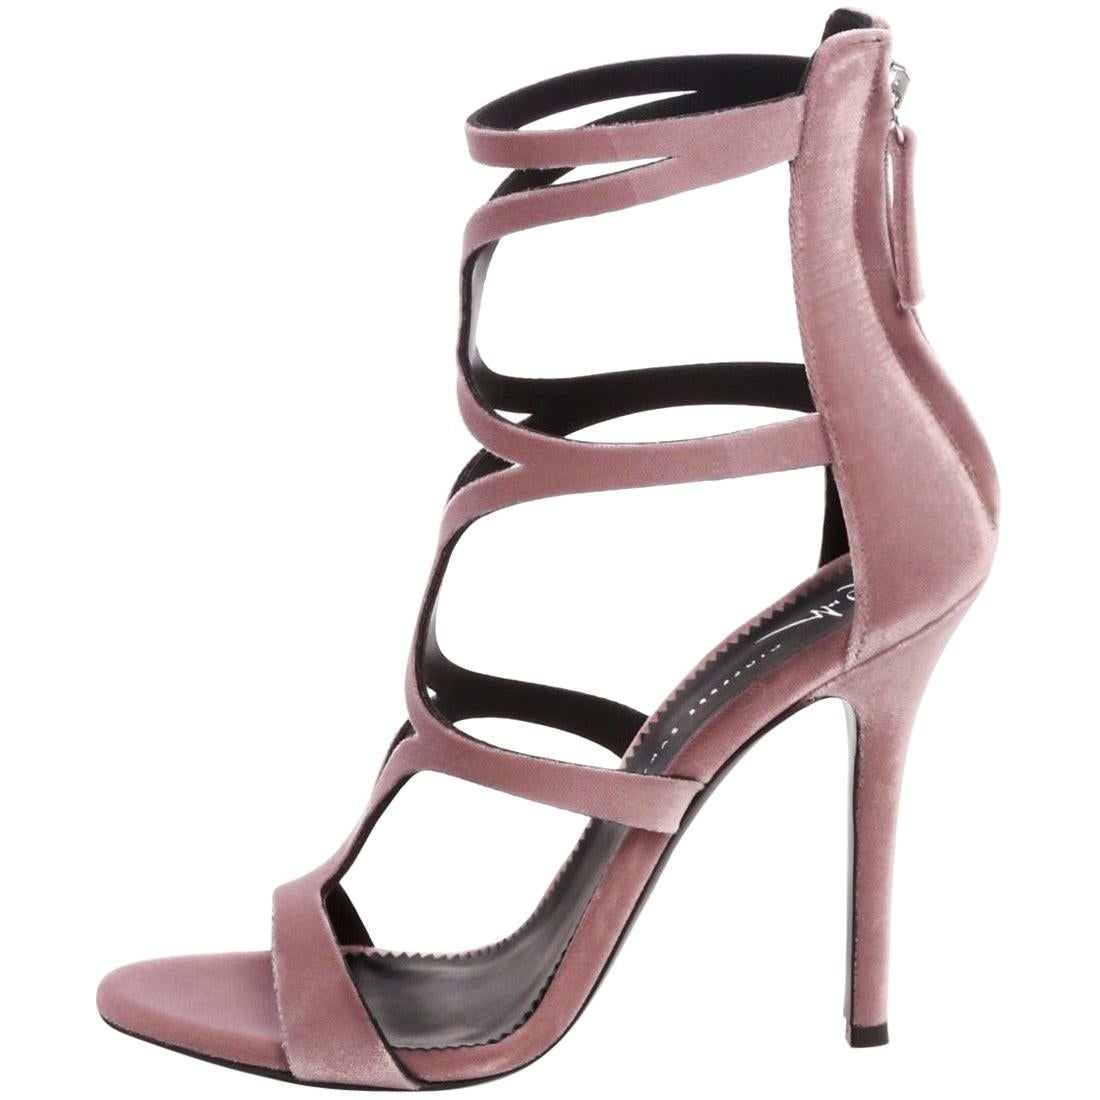 Giuseppe Zanotti NEW Pink Velvet Strappy Evening Sandals Heels in Box